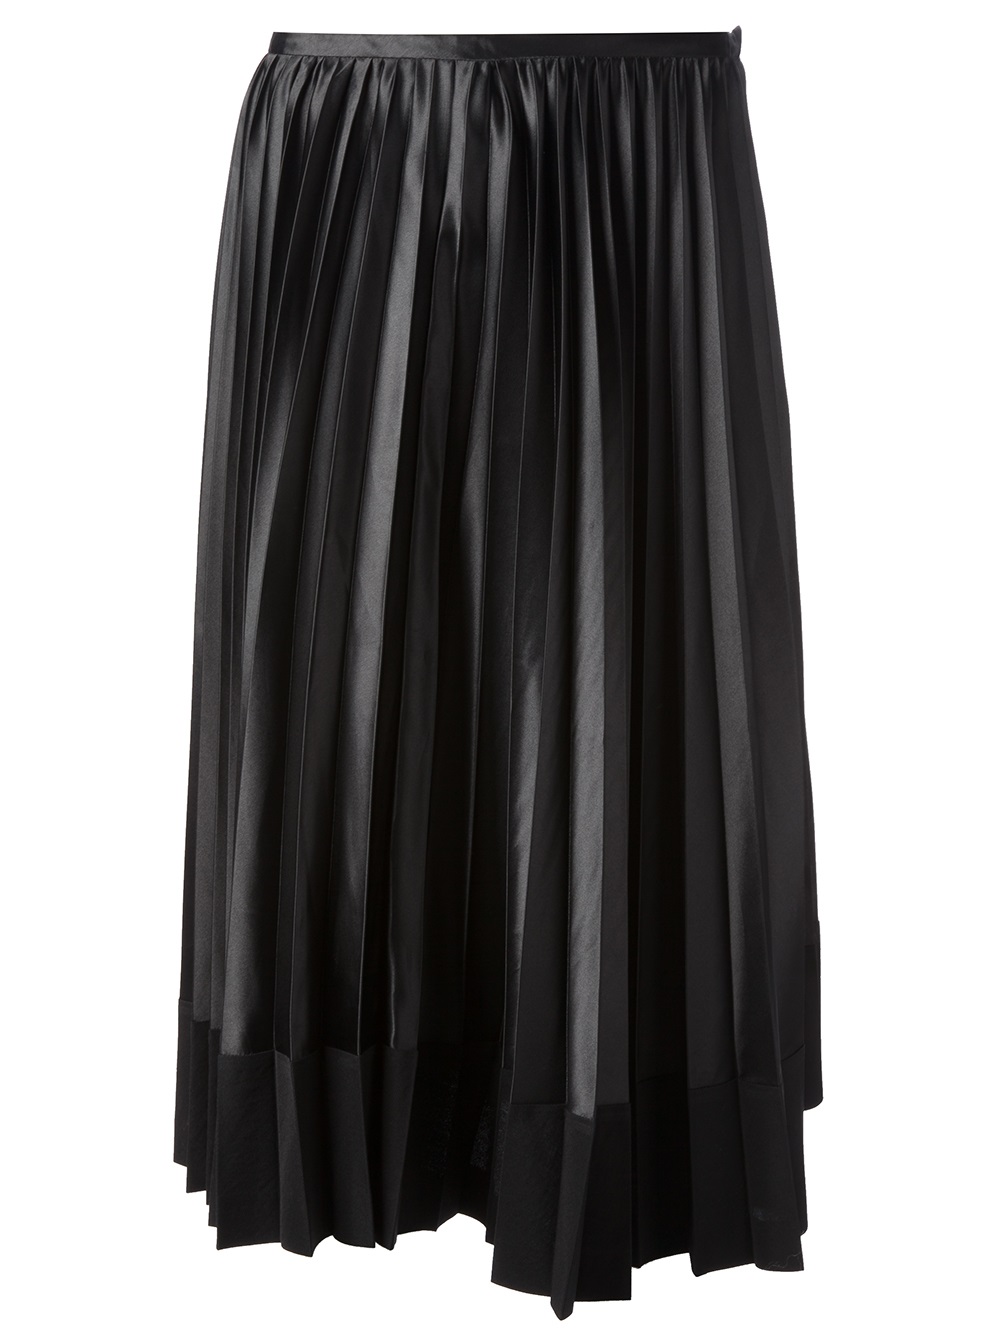 Comme des Garçons Pleated Skirt in Black - Lyst